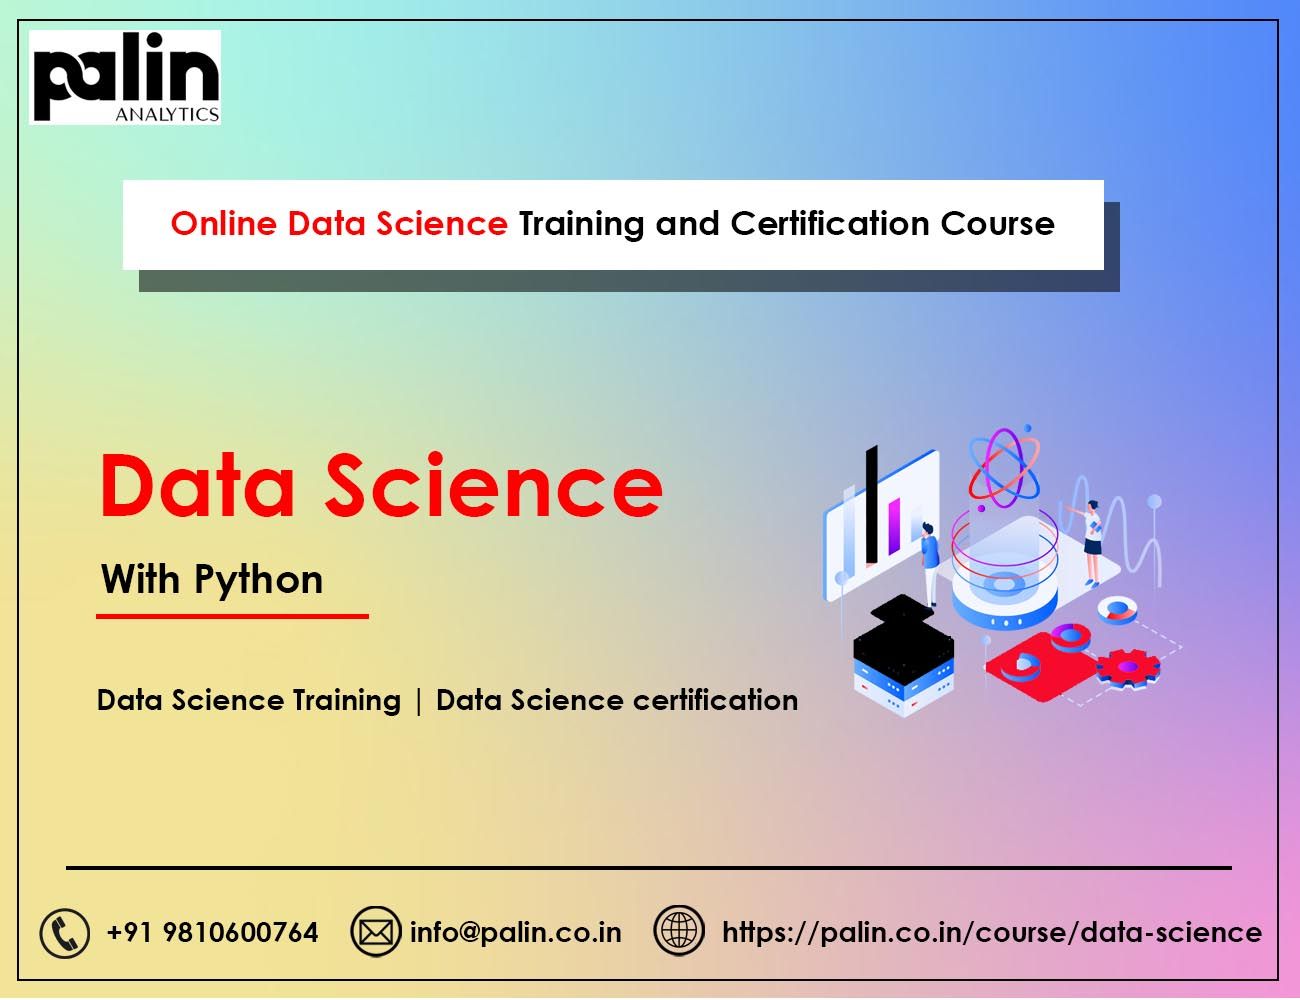 Best Data Science Certification & Online Training Course: Palin Analytics